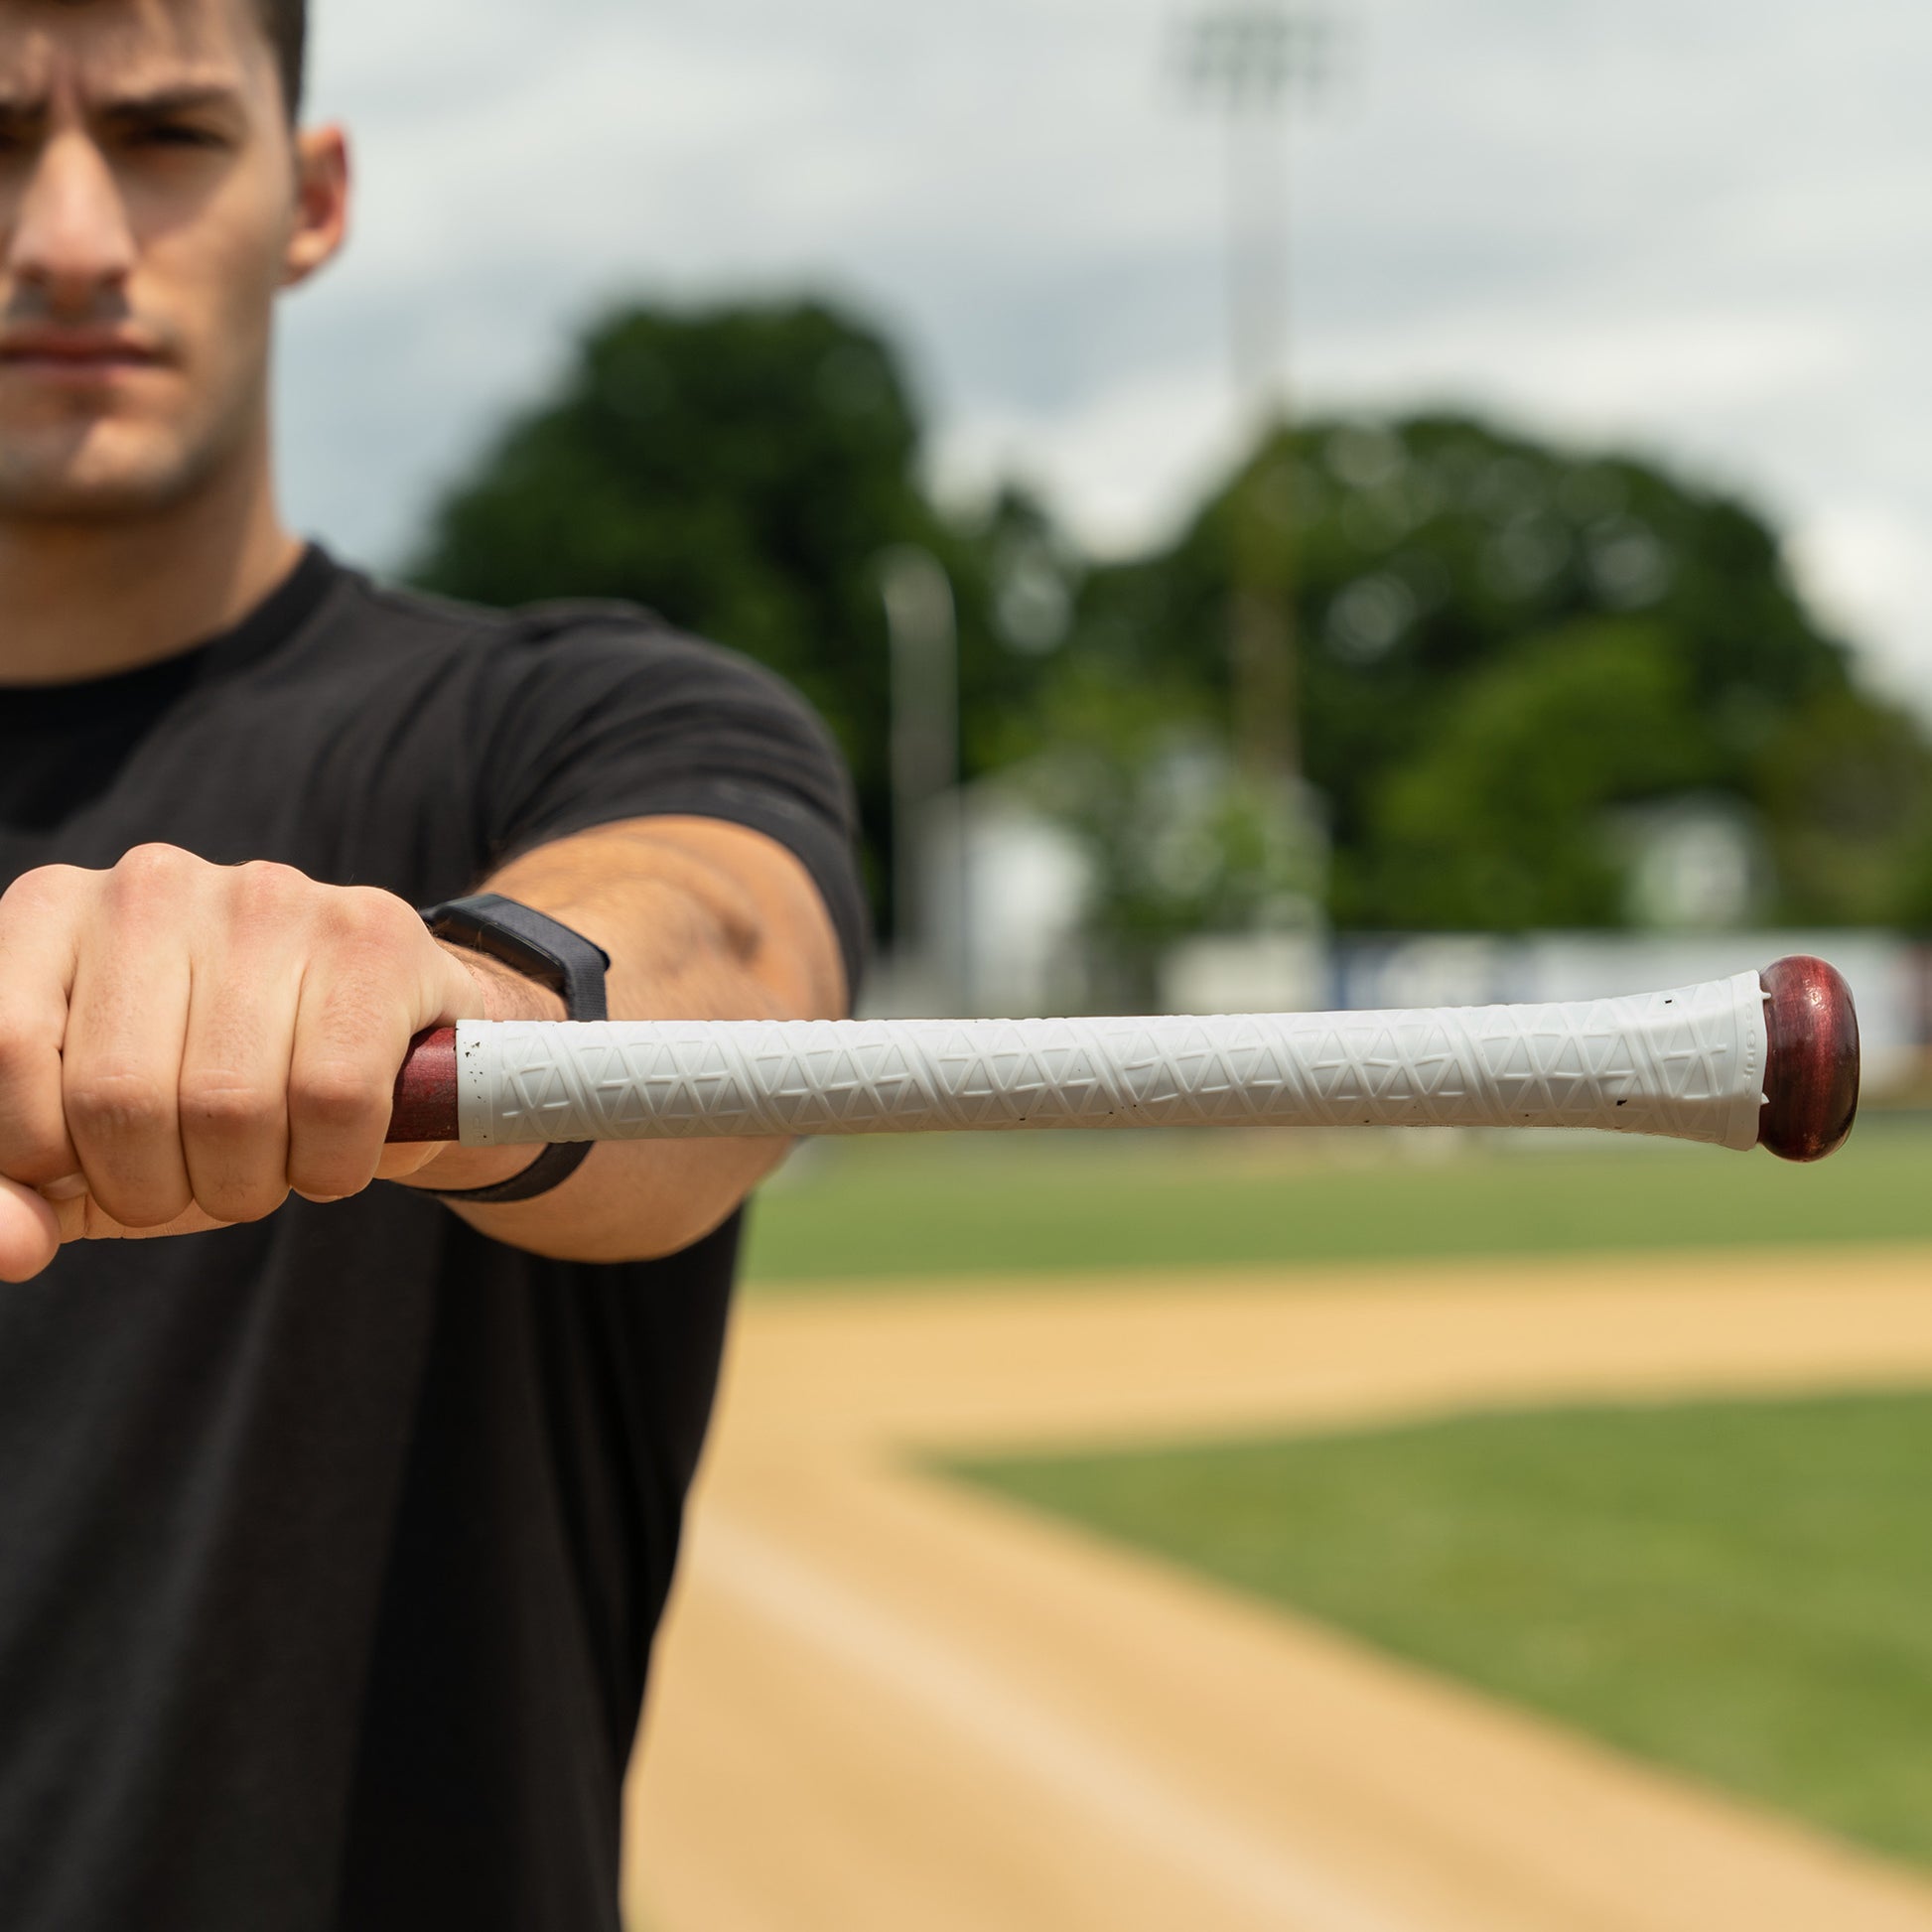 Tacky Towel Grip Traction Enhancer For Tennis, Golf, Baseball